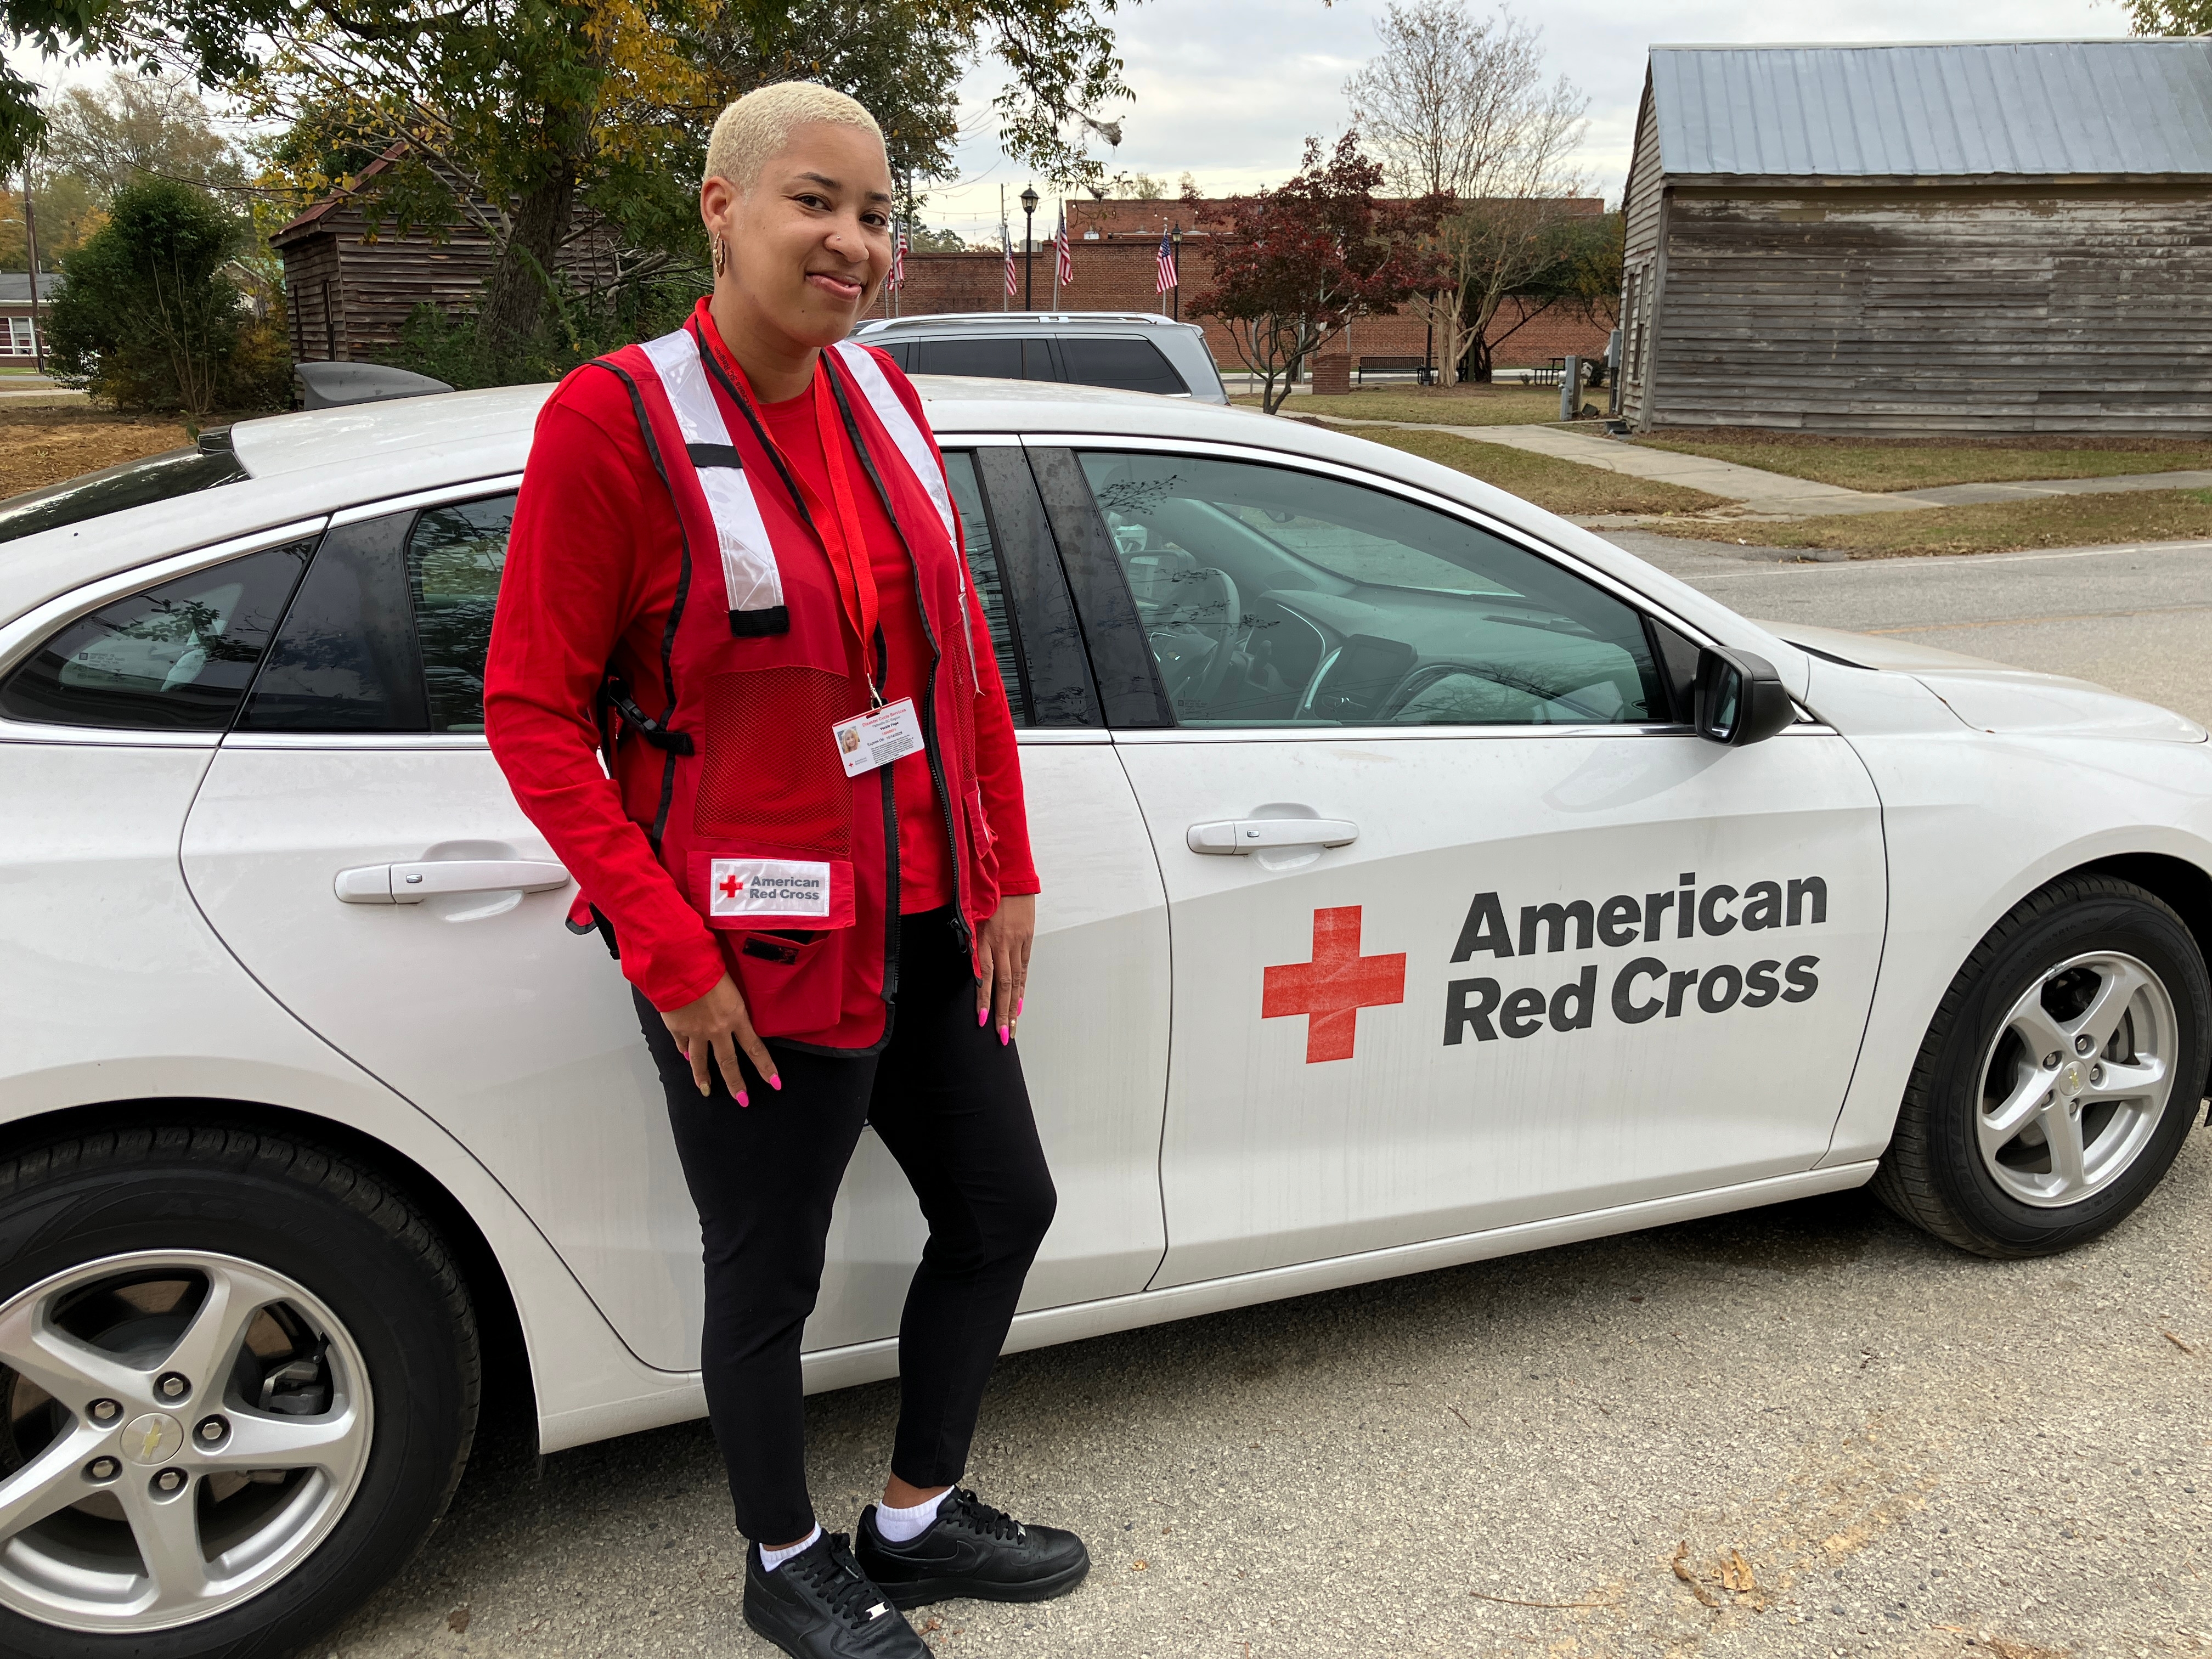 red cross volunteer next to red cross car